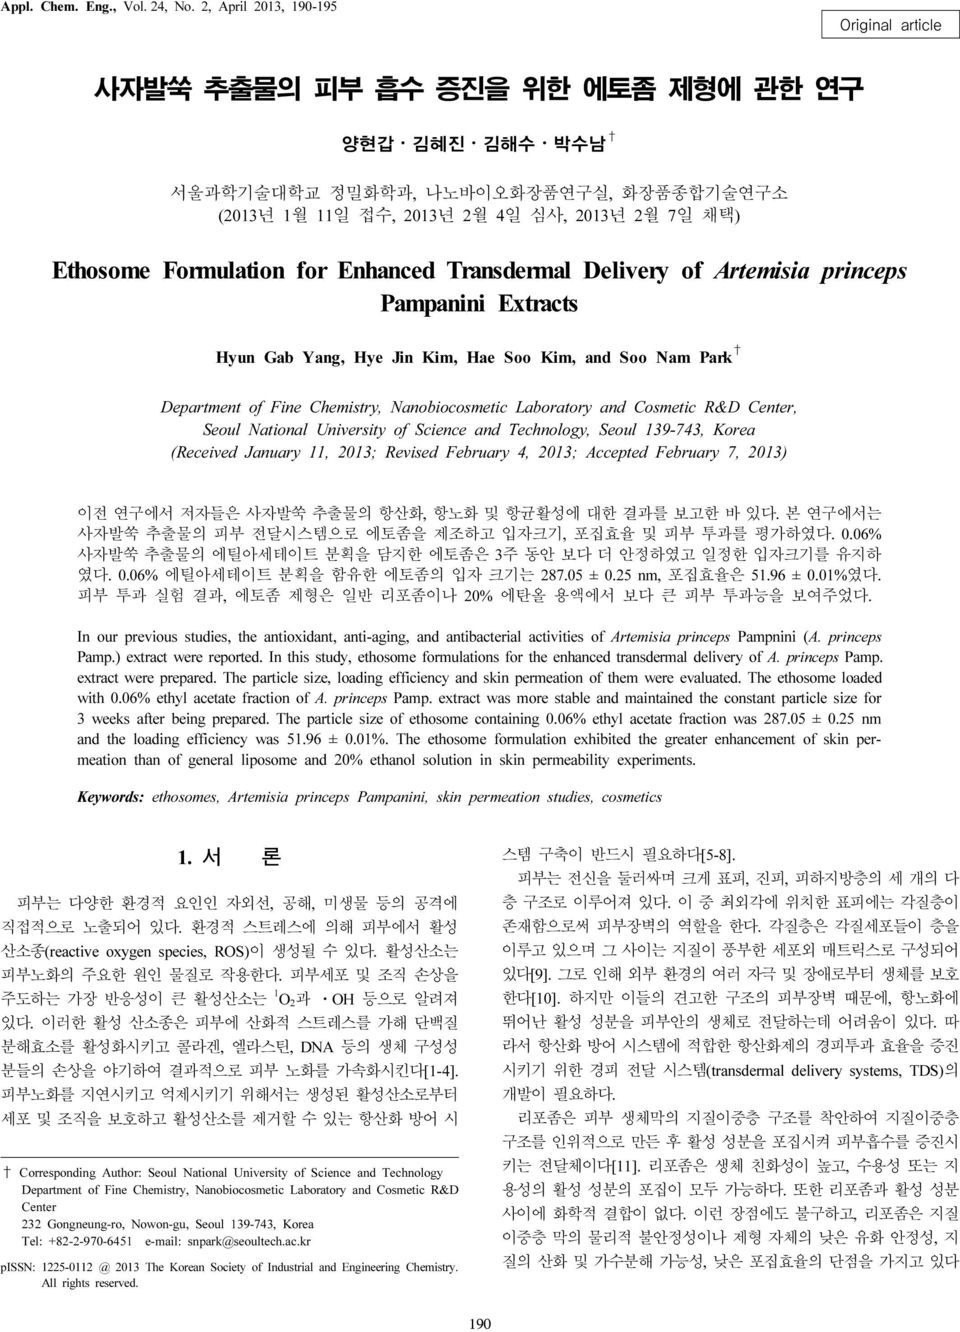 Formulation for Enhanced Transdermal Delivery of Artemisia princeps Pampanini Extracts Hyun Gab Yang, Hye Jin Kim, Hae Soo Kim, and Soo Nam Park Department of Fine Chemistry, Nanobiocosmetic